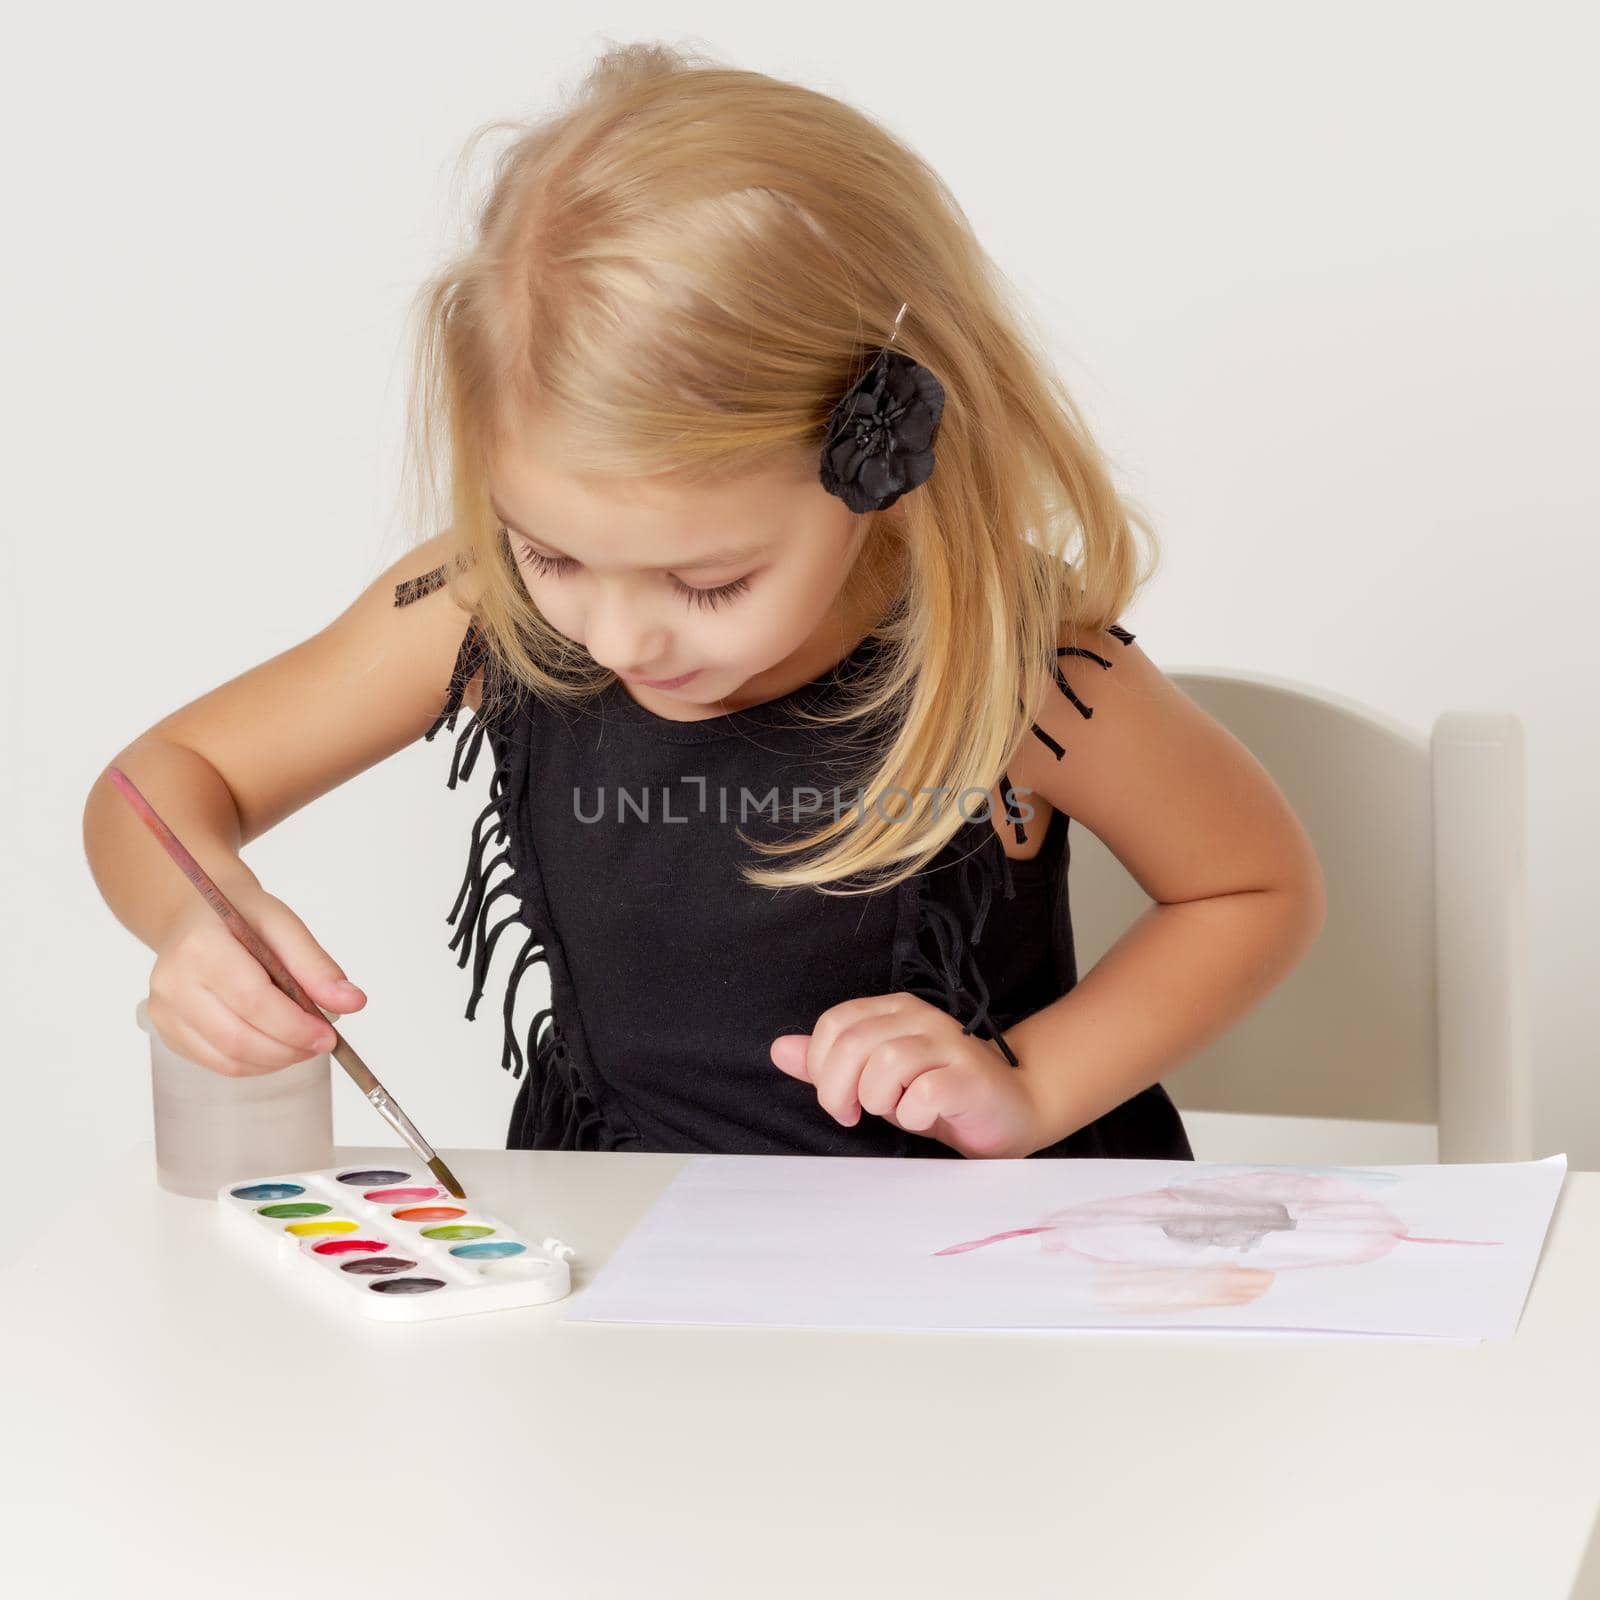 Little girl draws paints. by kolesnikov_studio